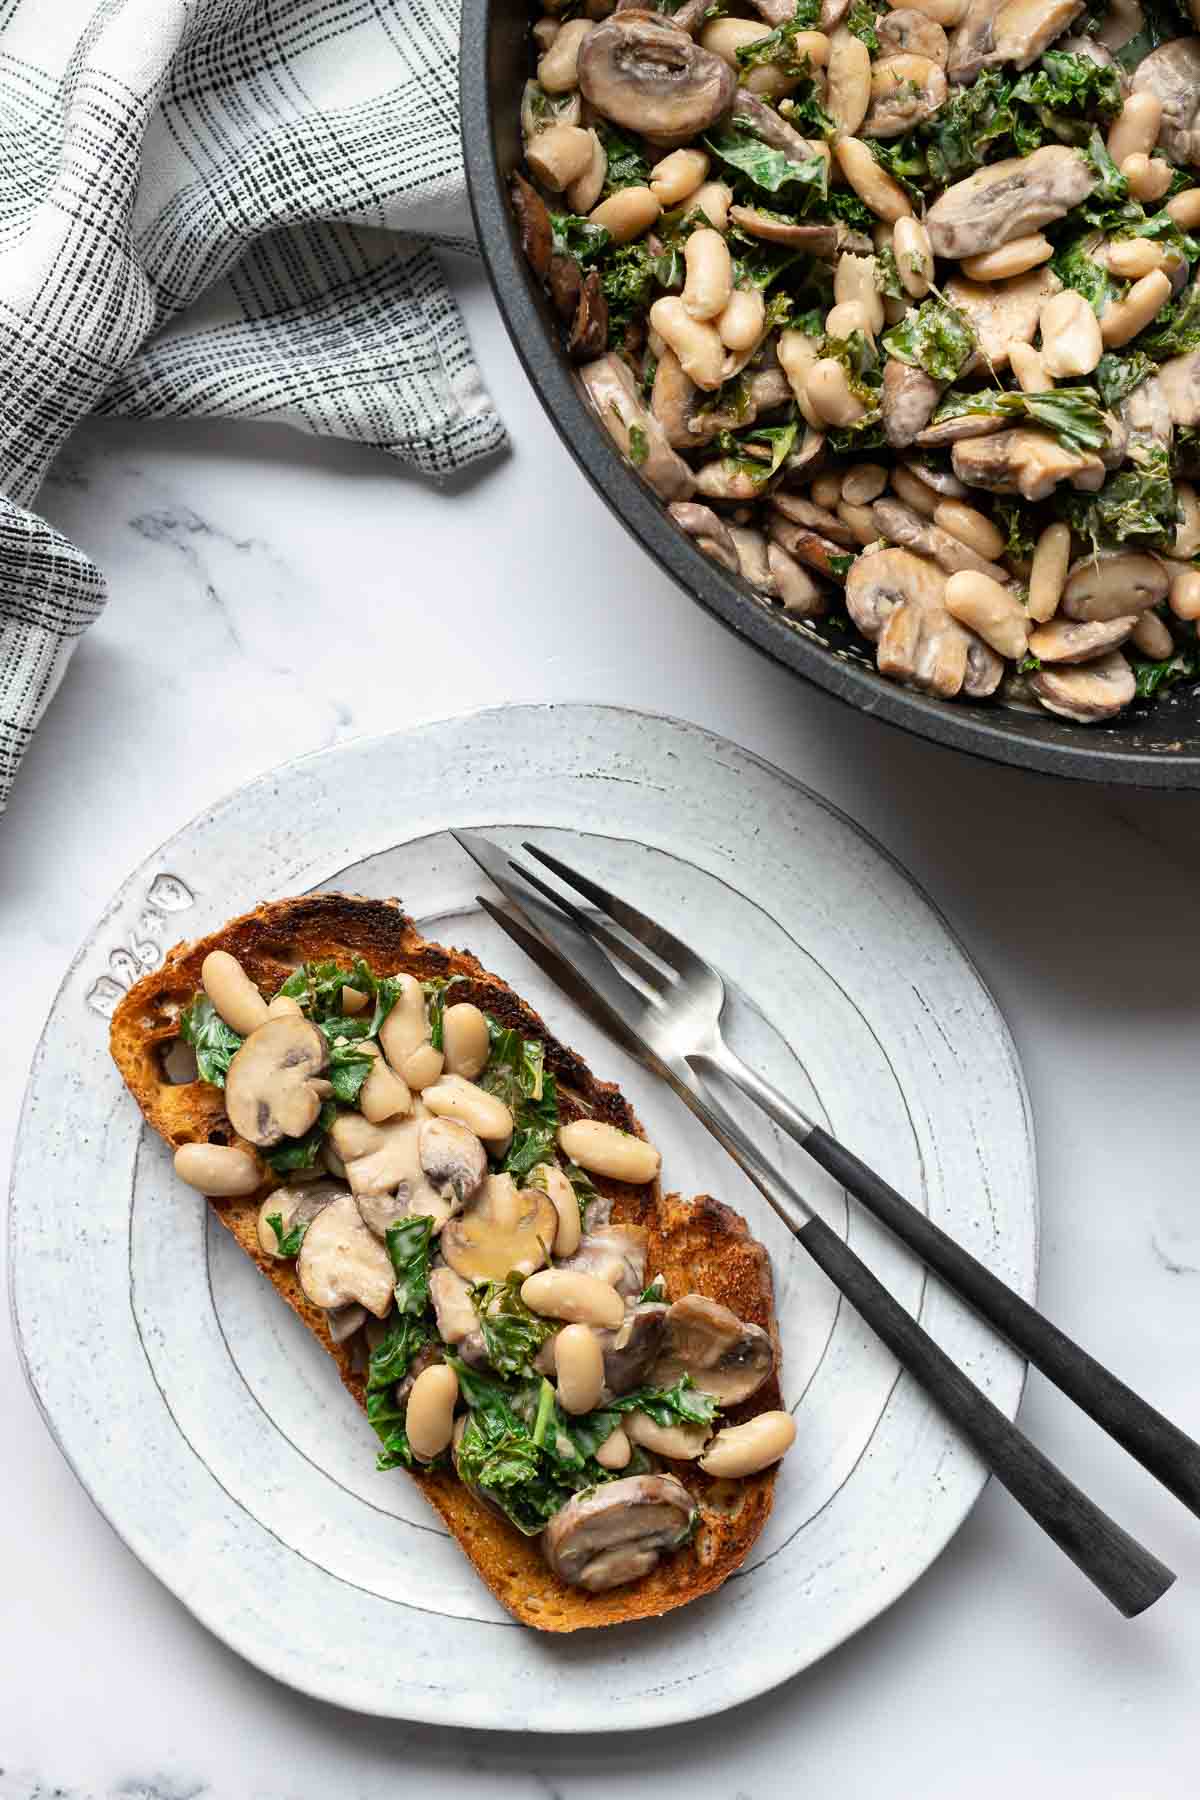 Braised Mushrooms and White Beans on Toast